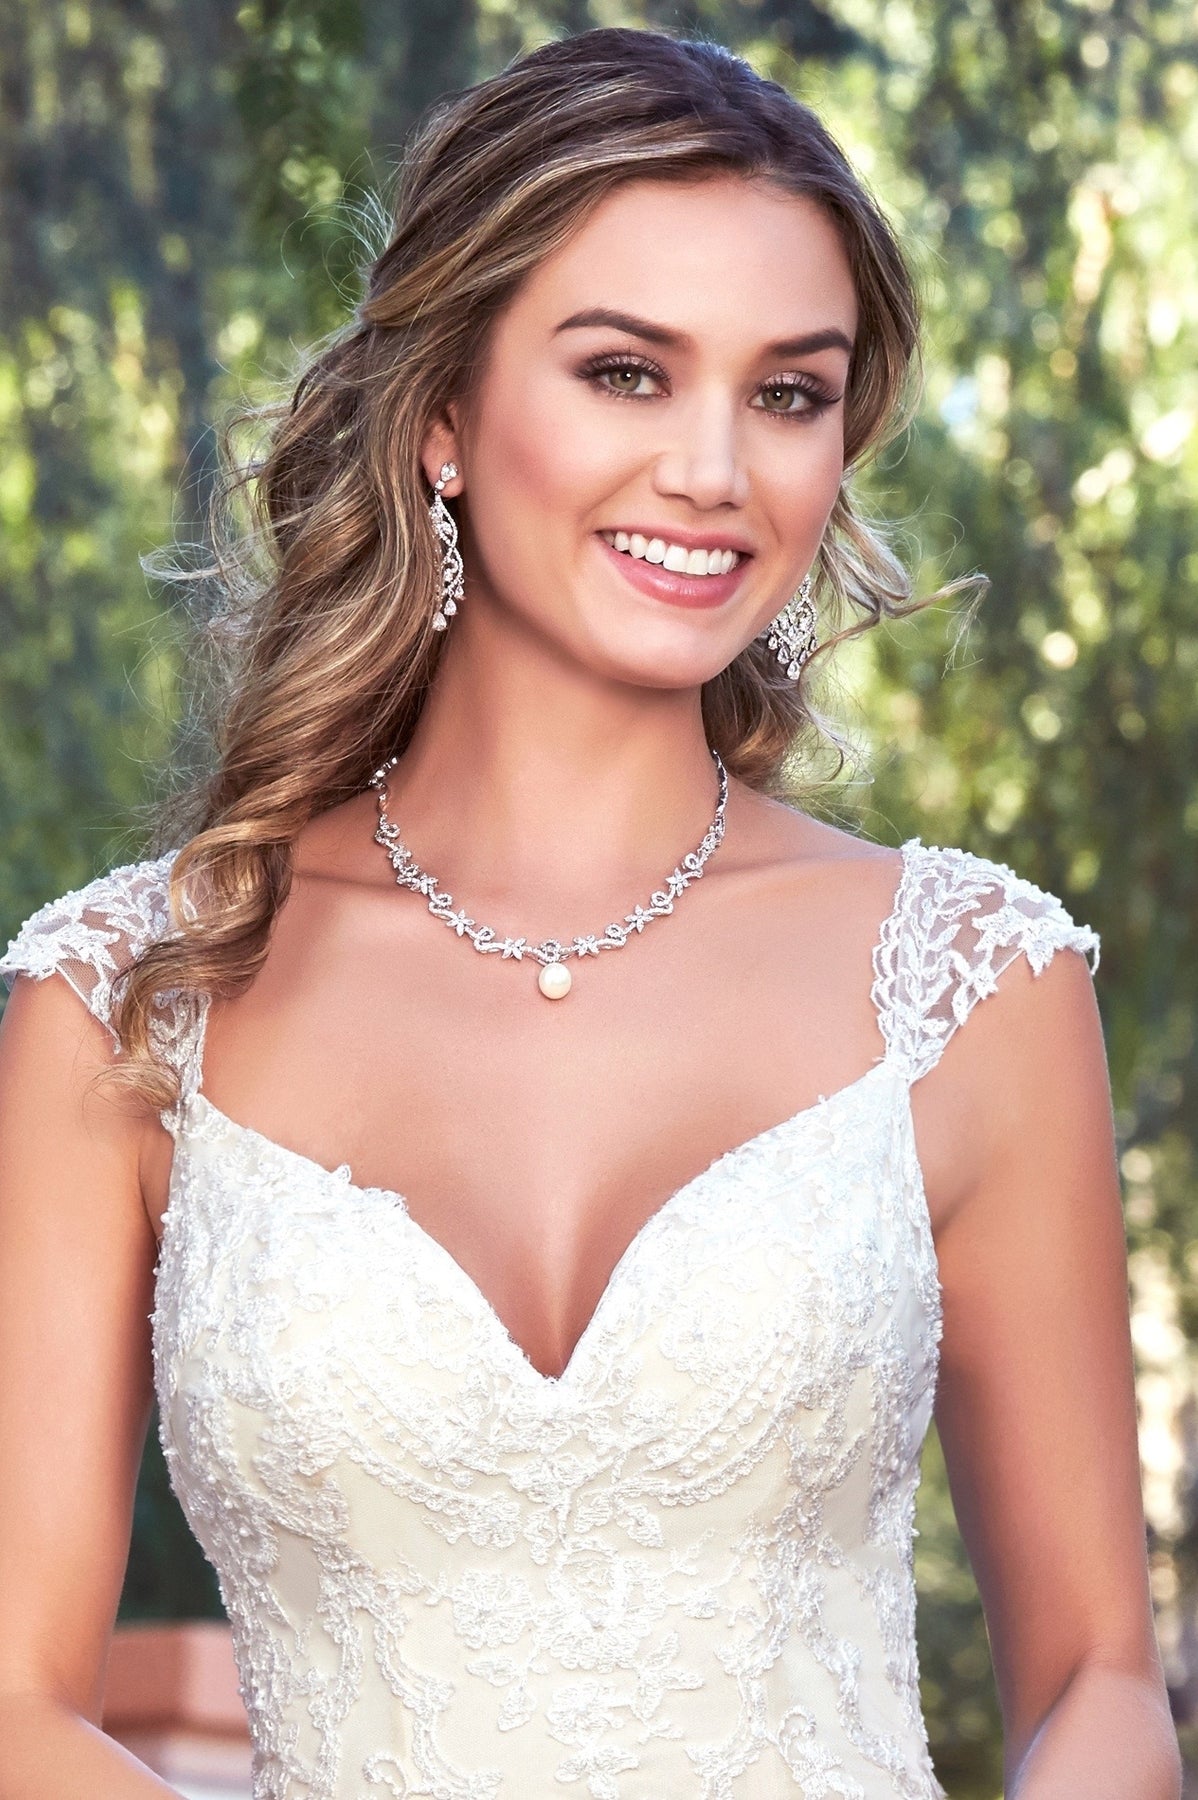 Bridal Wedding Dress and Silver Jewelry